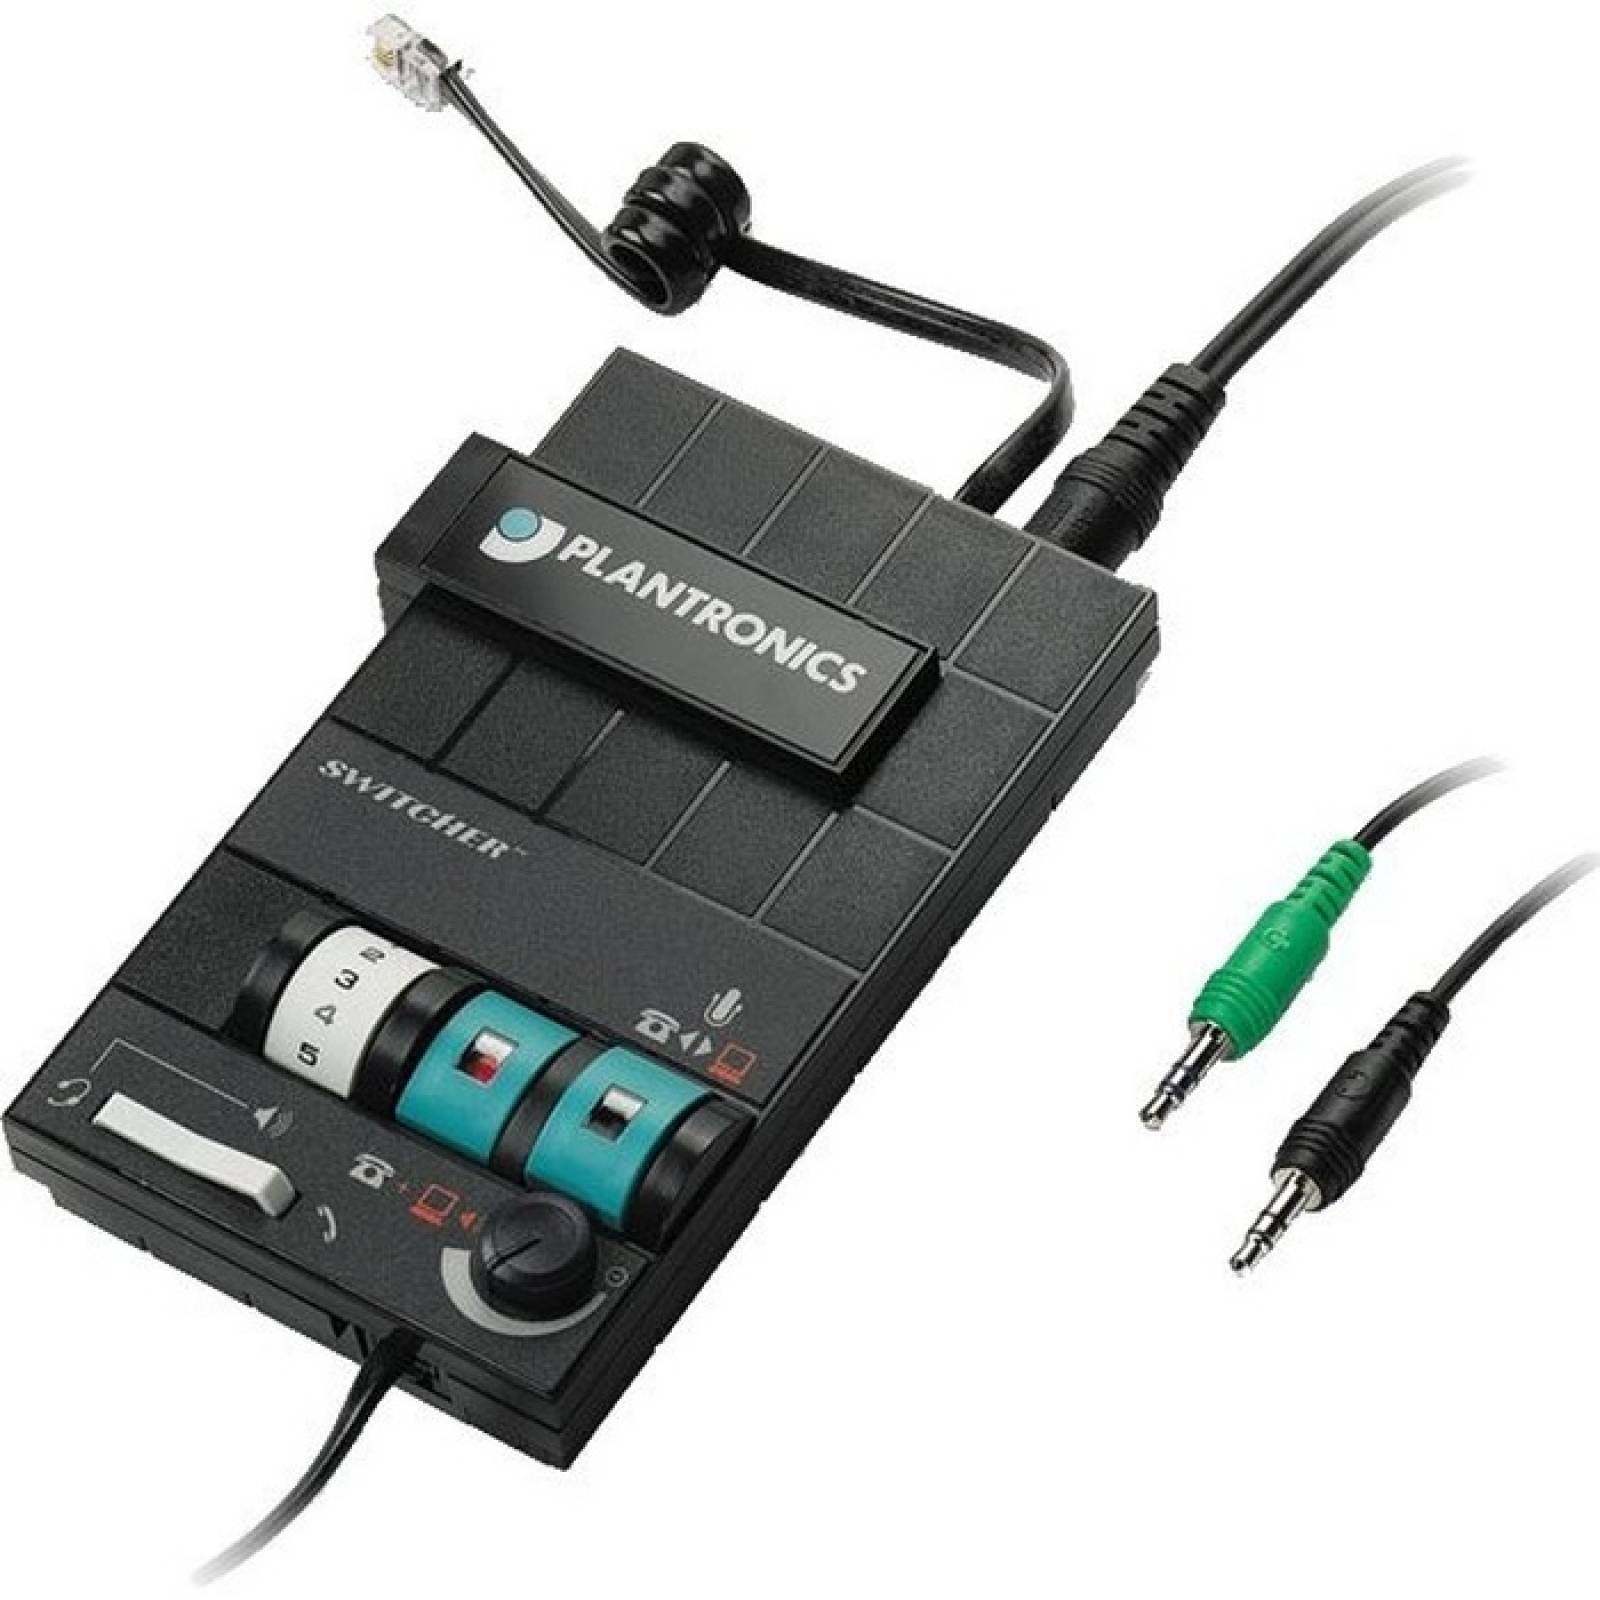 Plantronics MX10 Audio Processor